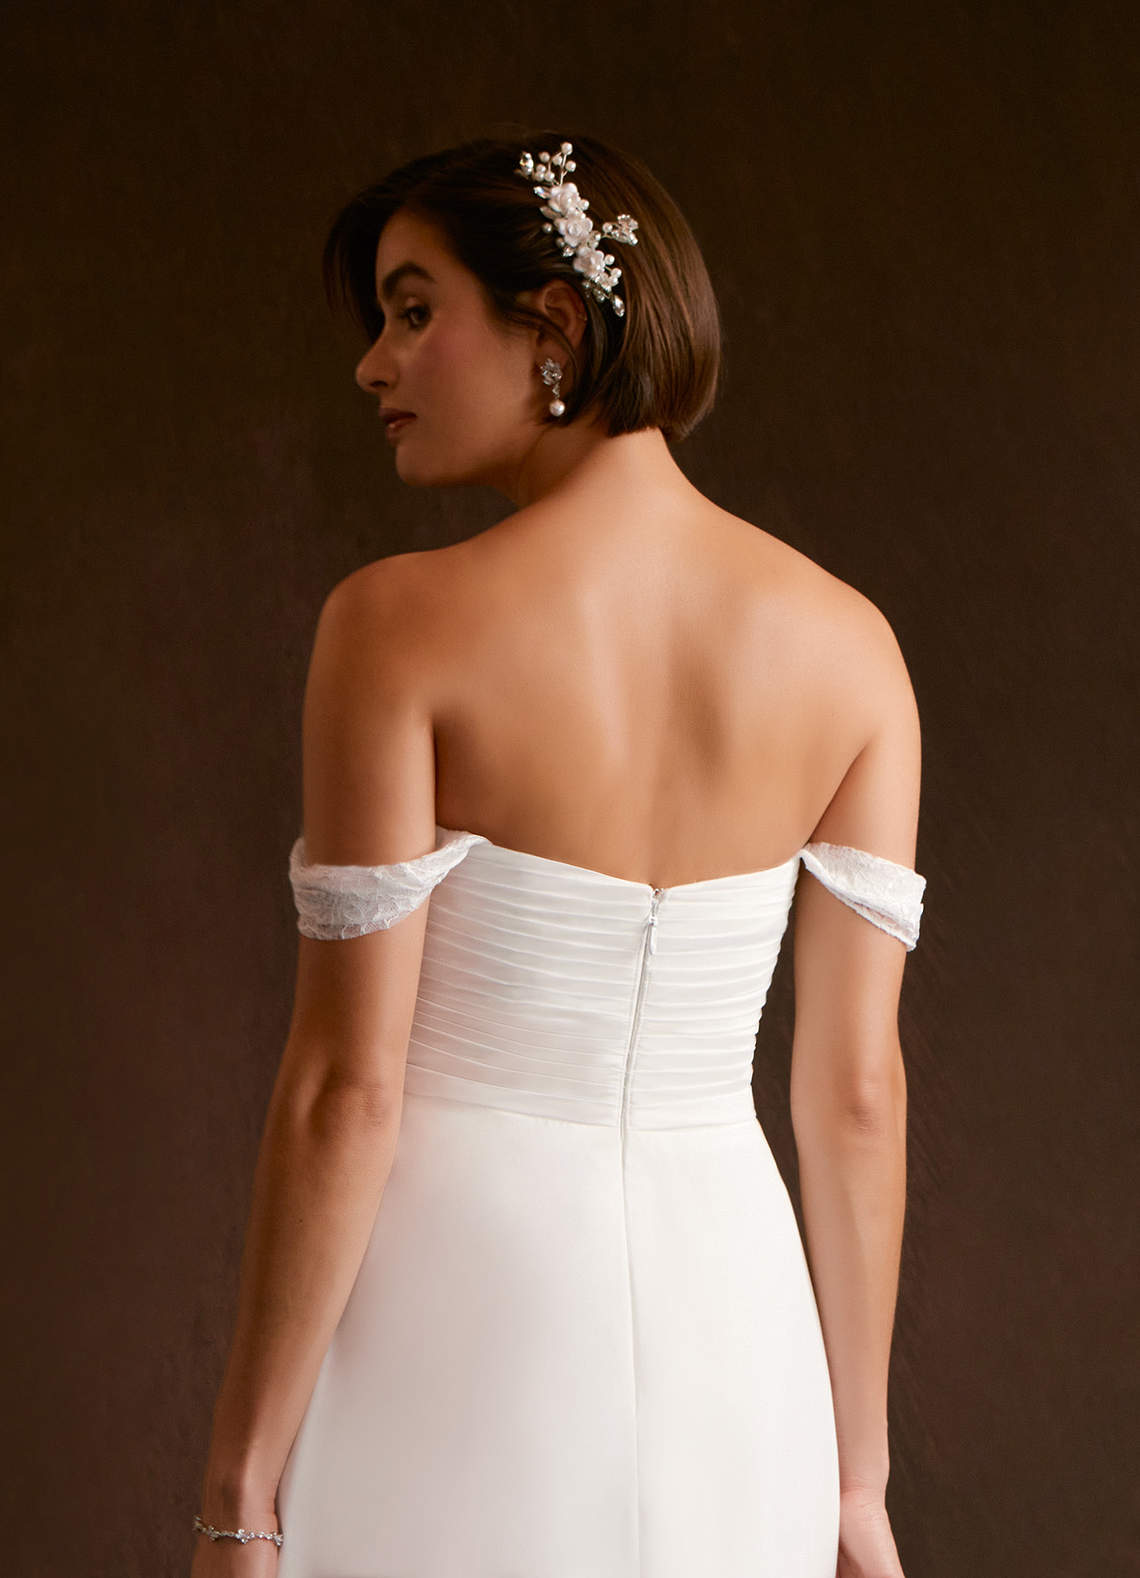 Azazie Zadie Wedding Dresses A-Line Off the Shoulder Chiffon Floor-Length Dress image1